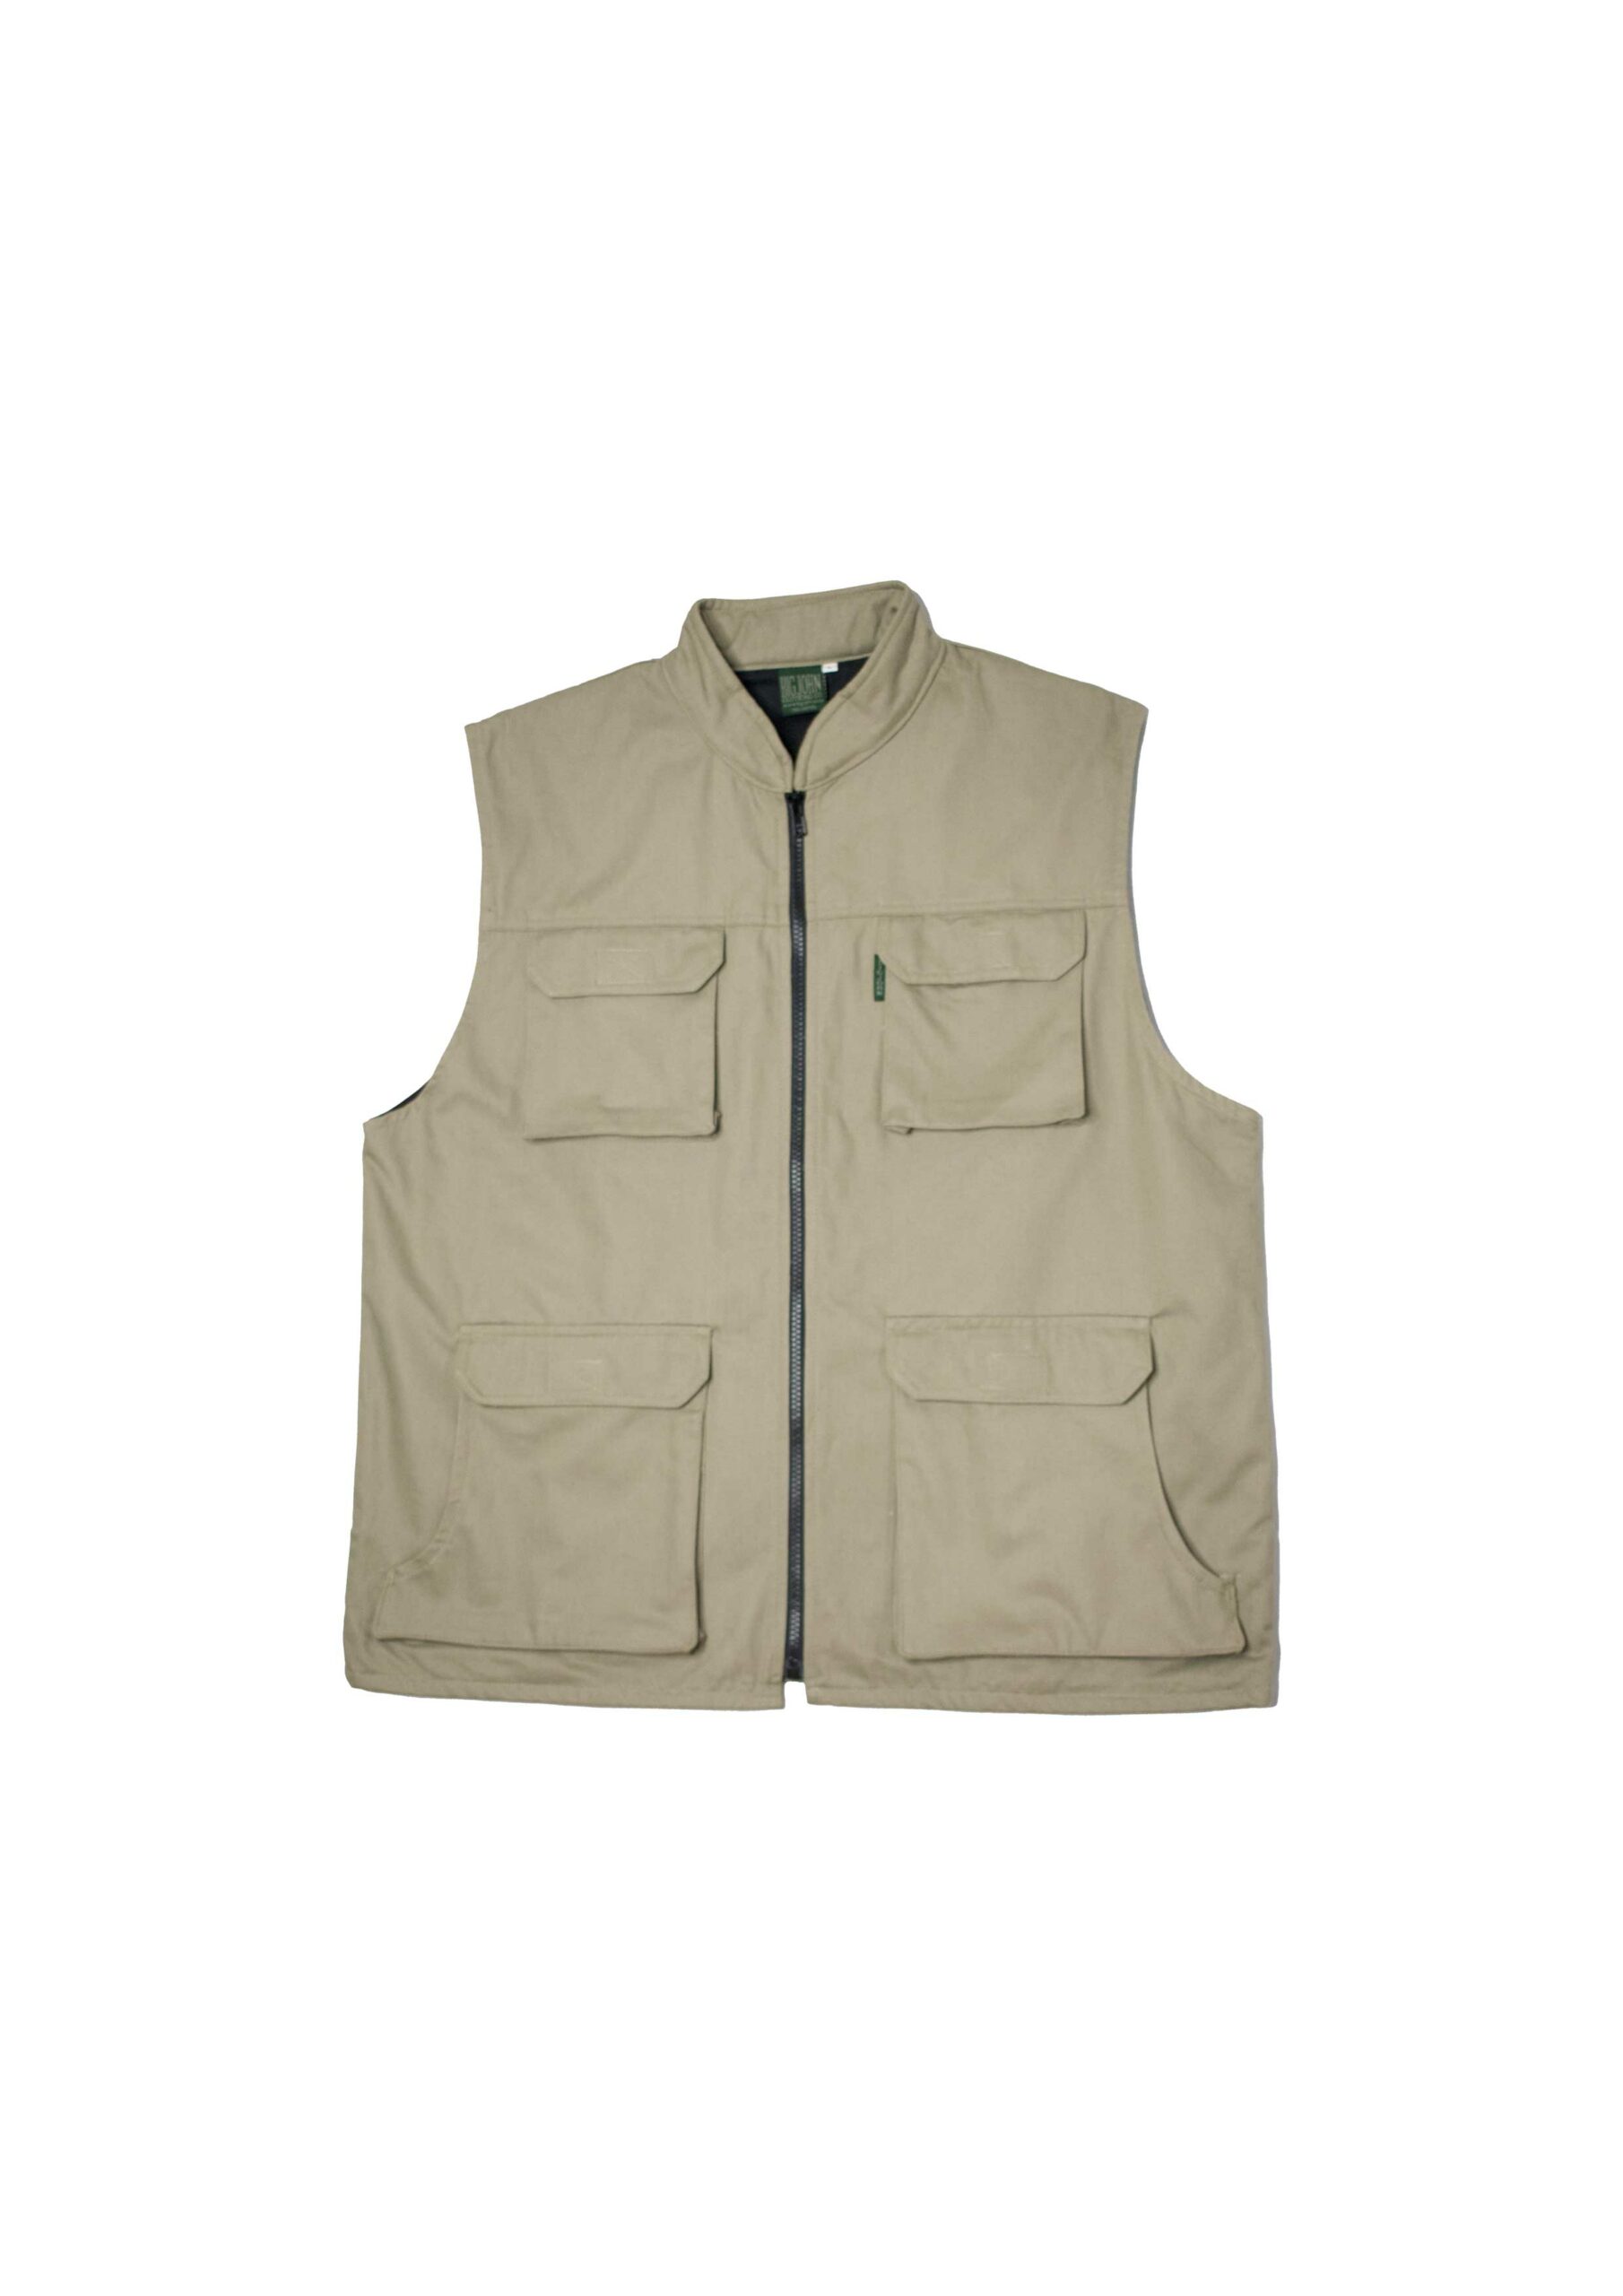 Savuti Bush Vest - Quilted - Olive & Khaki - Big John Online Clothing ...